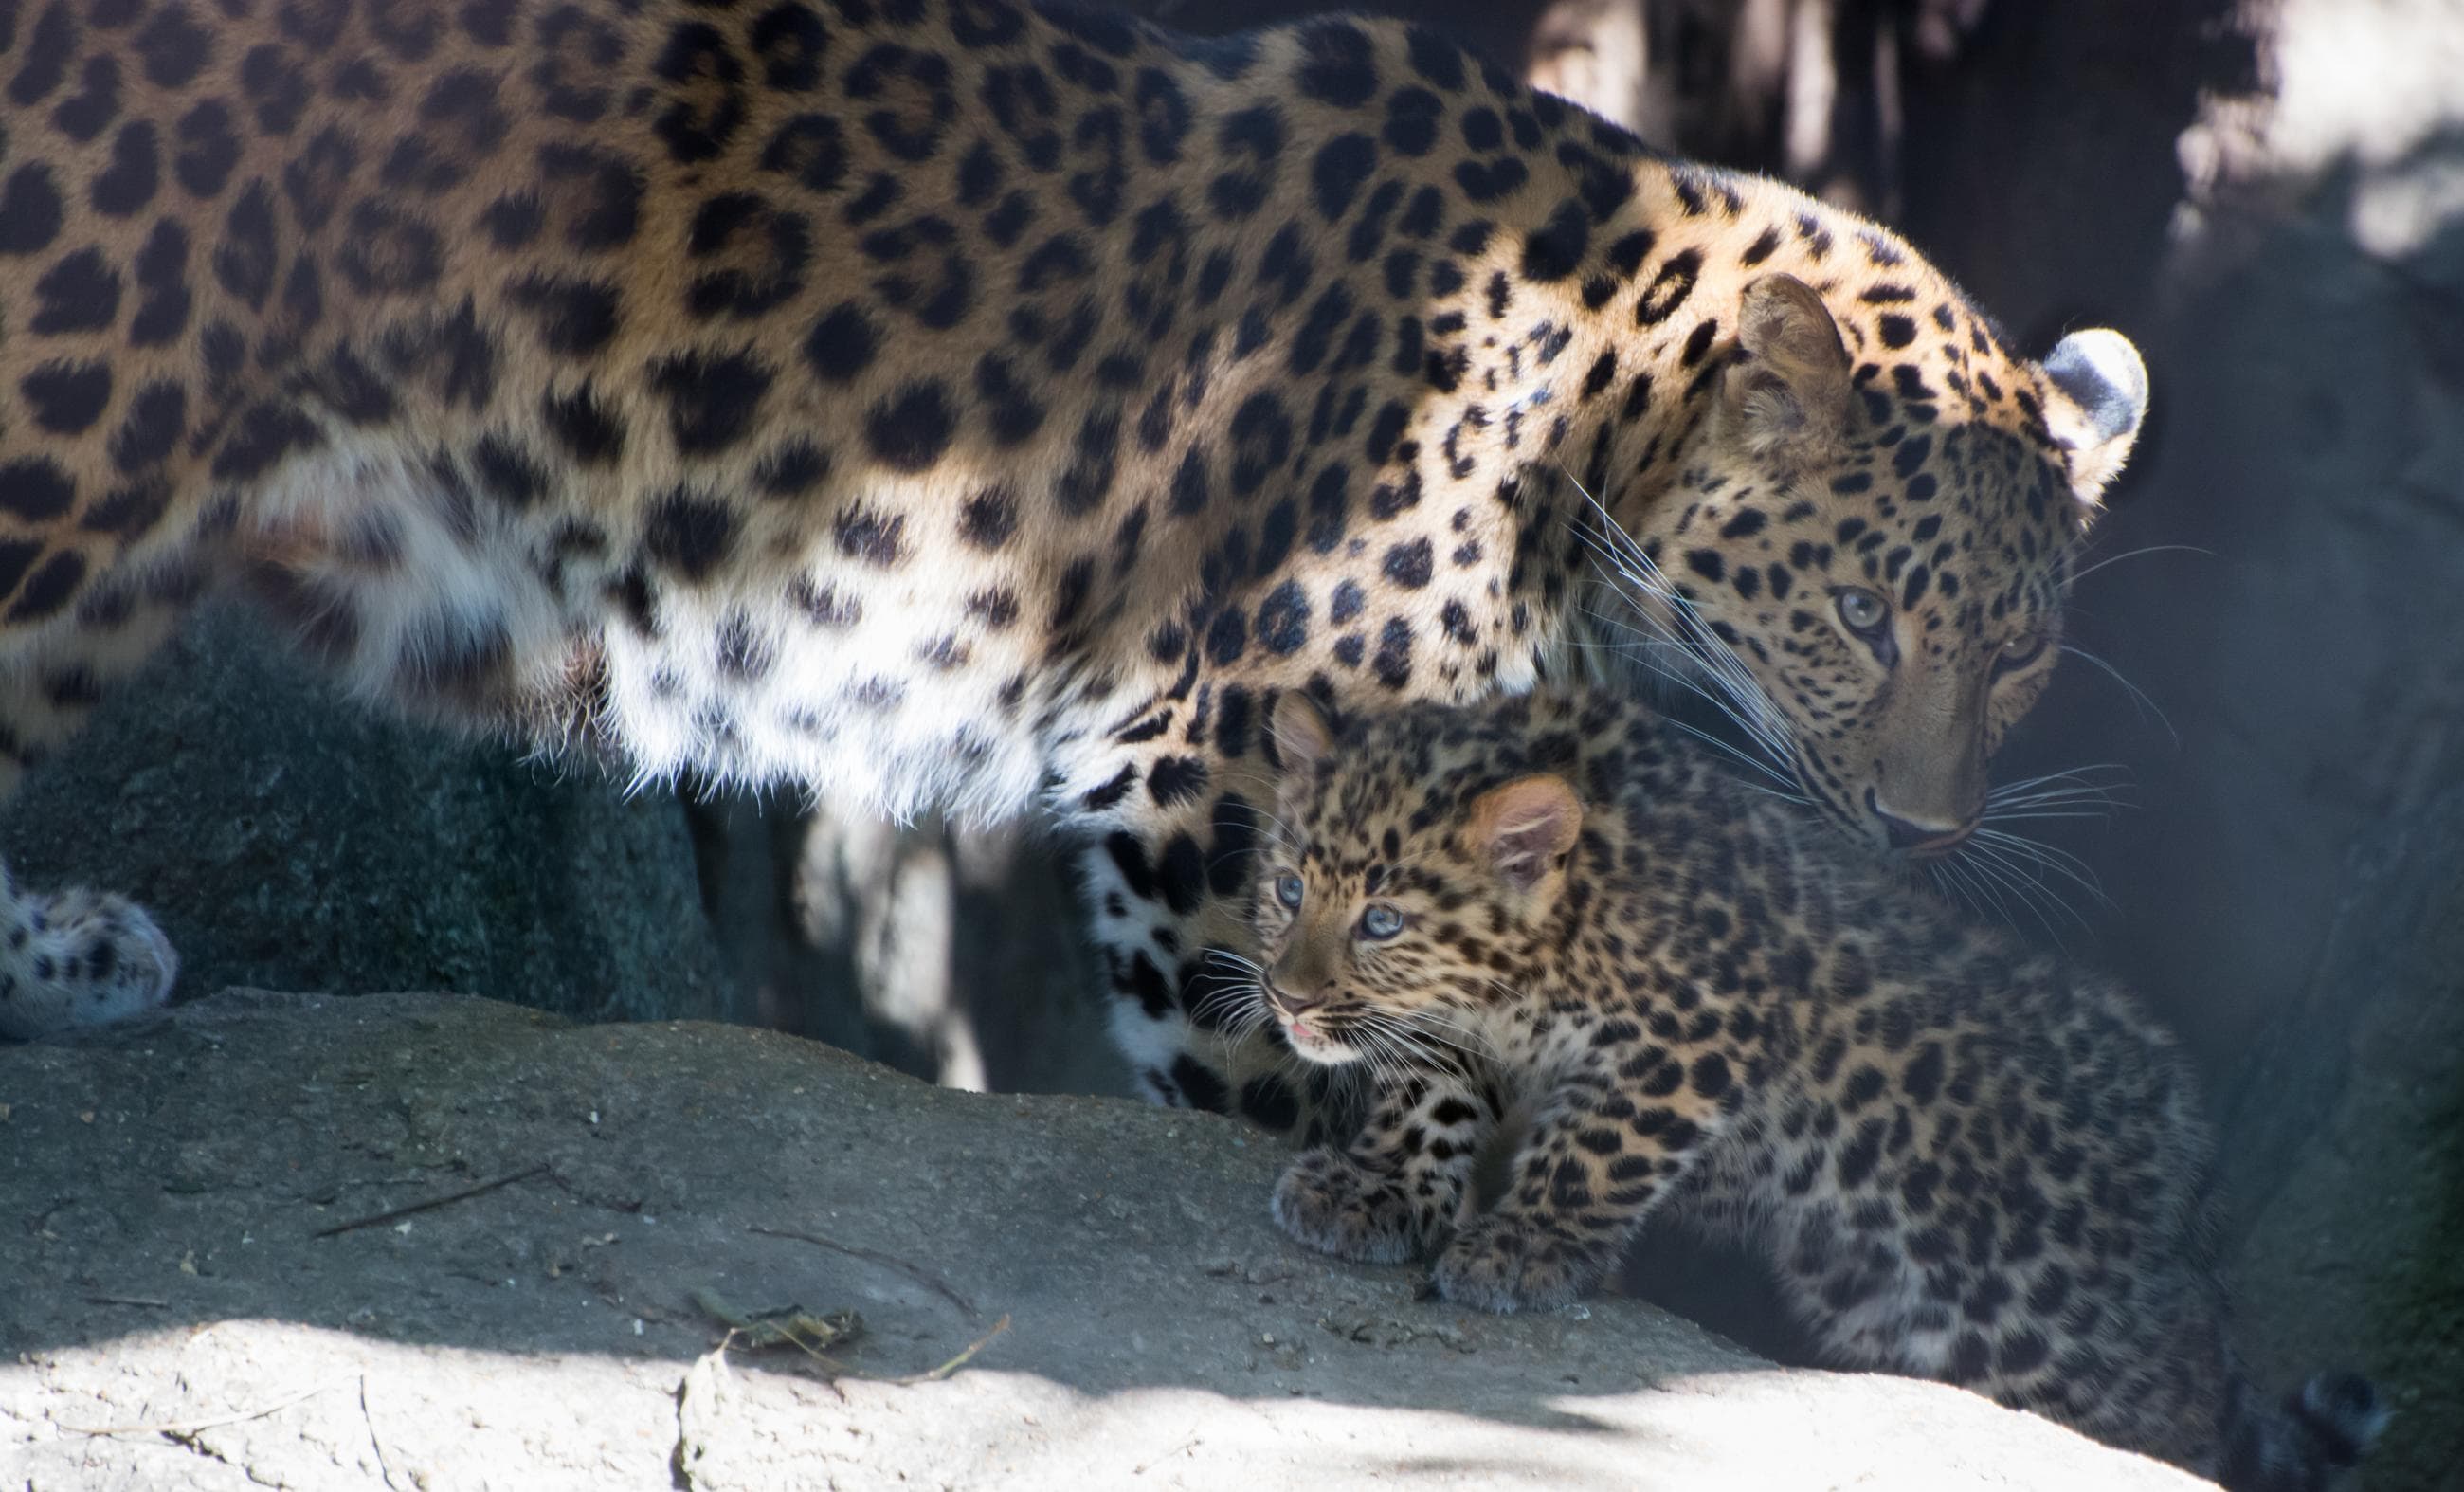 Amur leopard cubs exploring outdoor habitat, blog